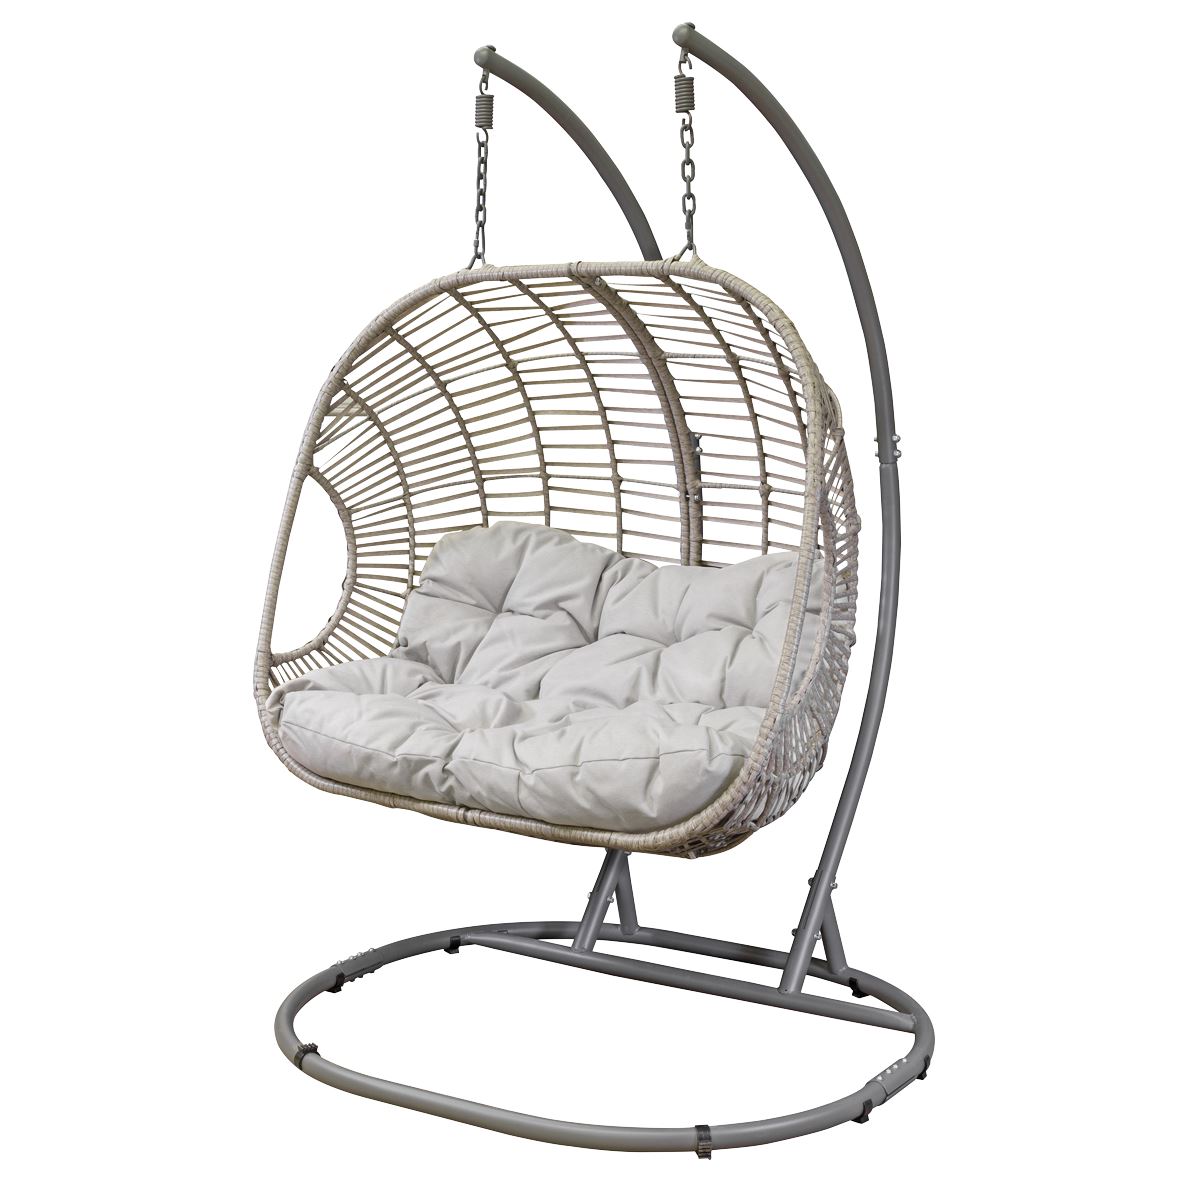 Dellonda Egg Hanging Swing Chair, Wicker Rattan Basket, Steel Frame, Double